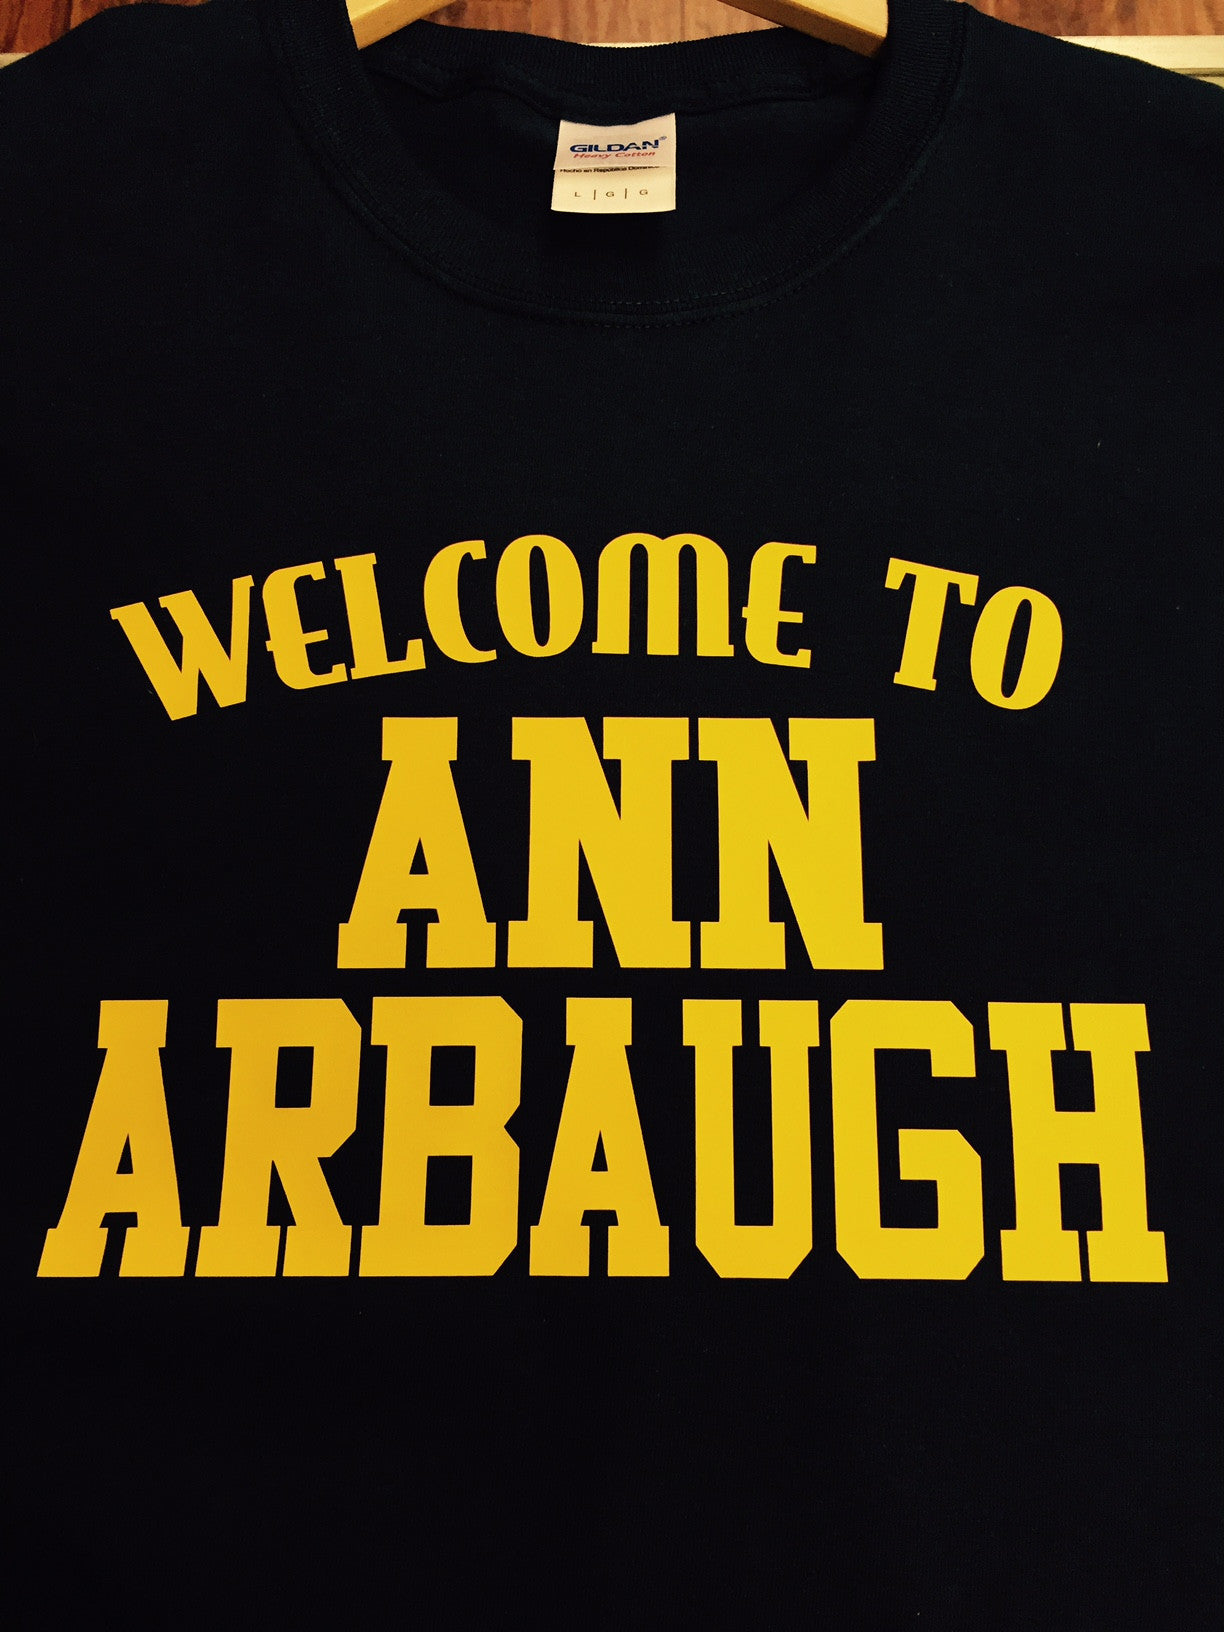 Ann Arbor Tees - Custom Hockey Jerseys: The Stylish Team Will